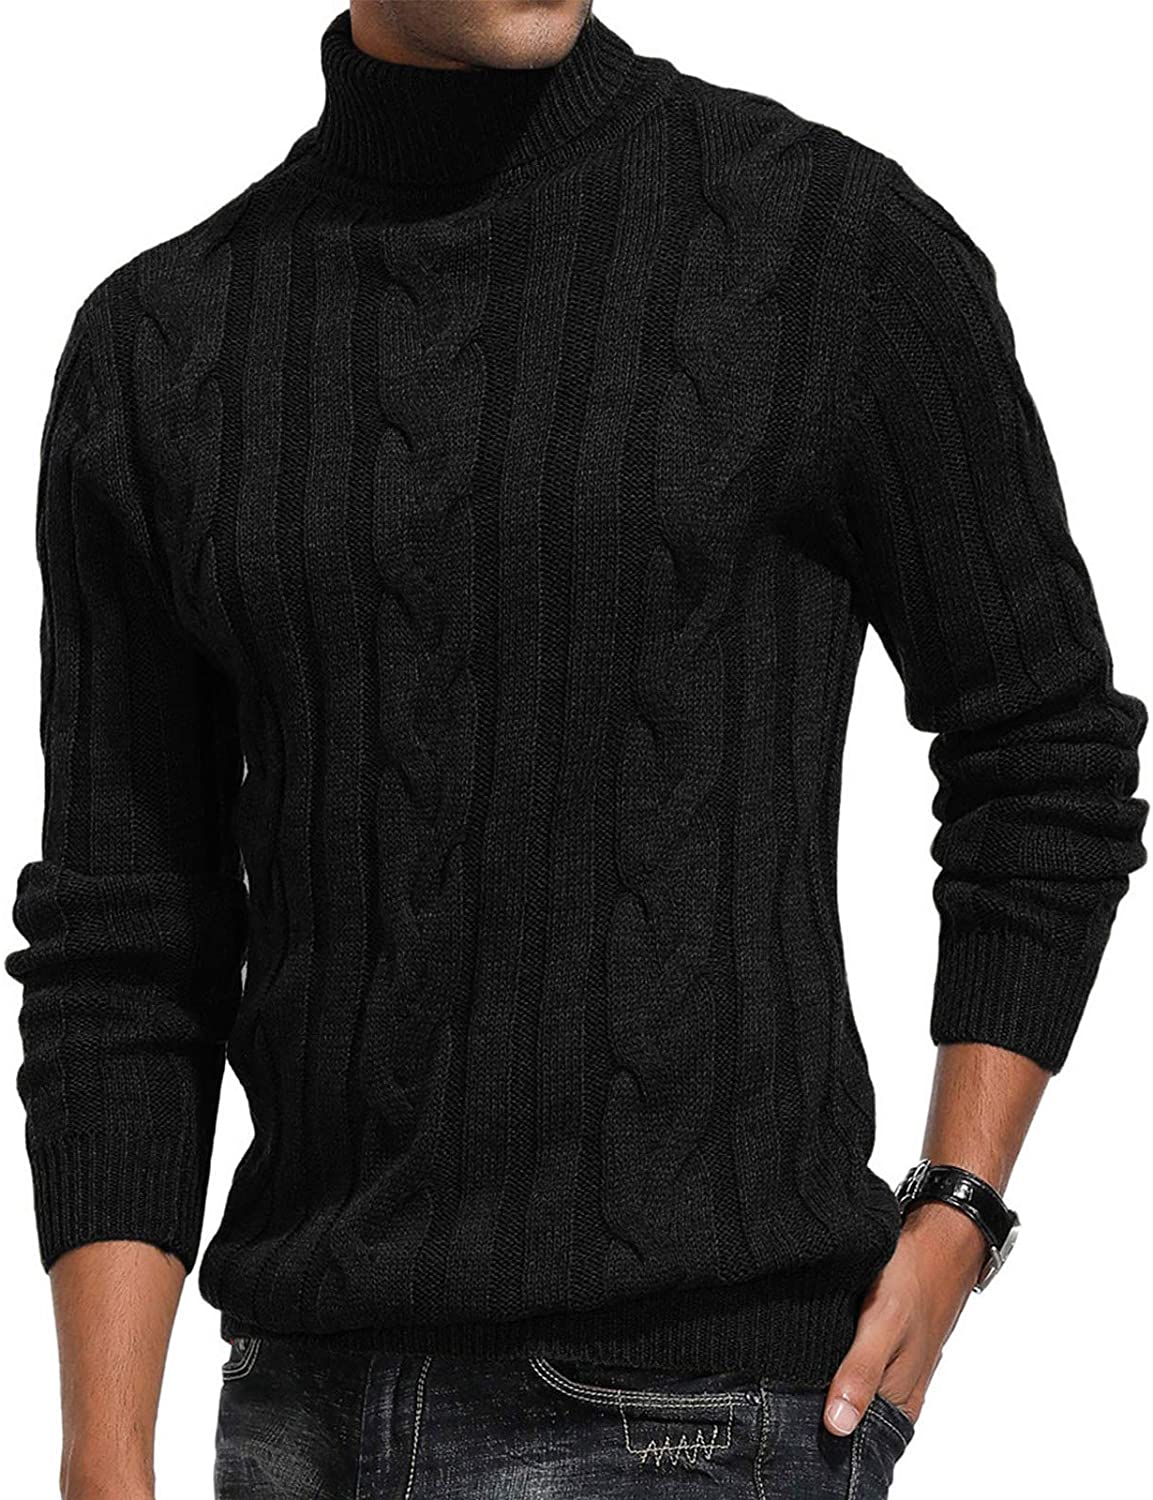 PJ PAUL JONES Men's Casual Turtleneck Sweaters Cable Knit Thermal ...